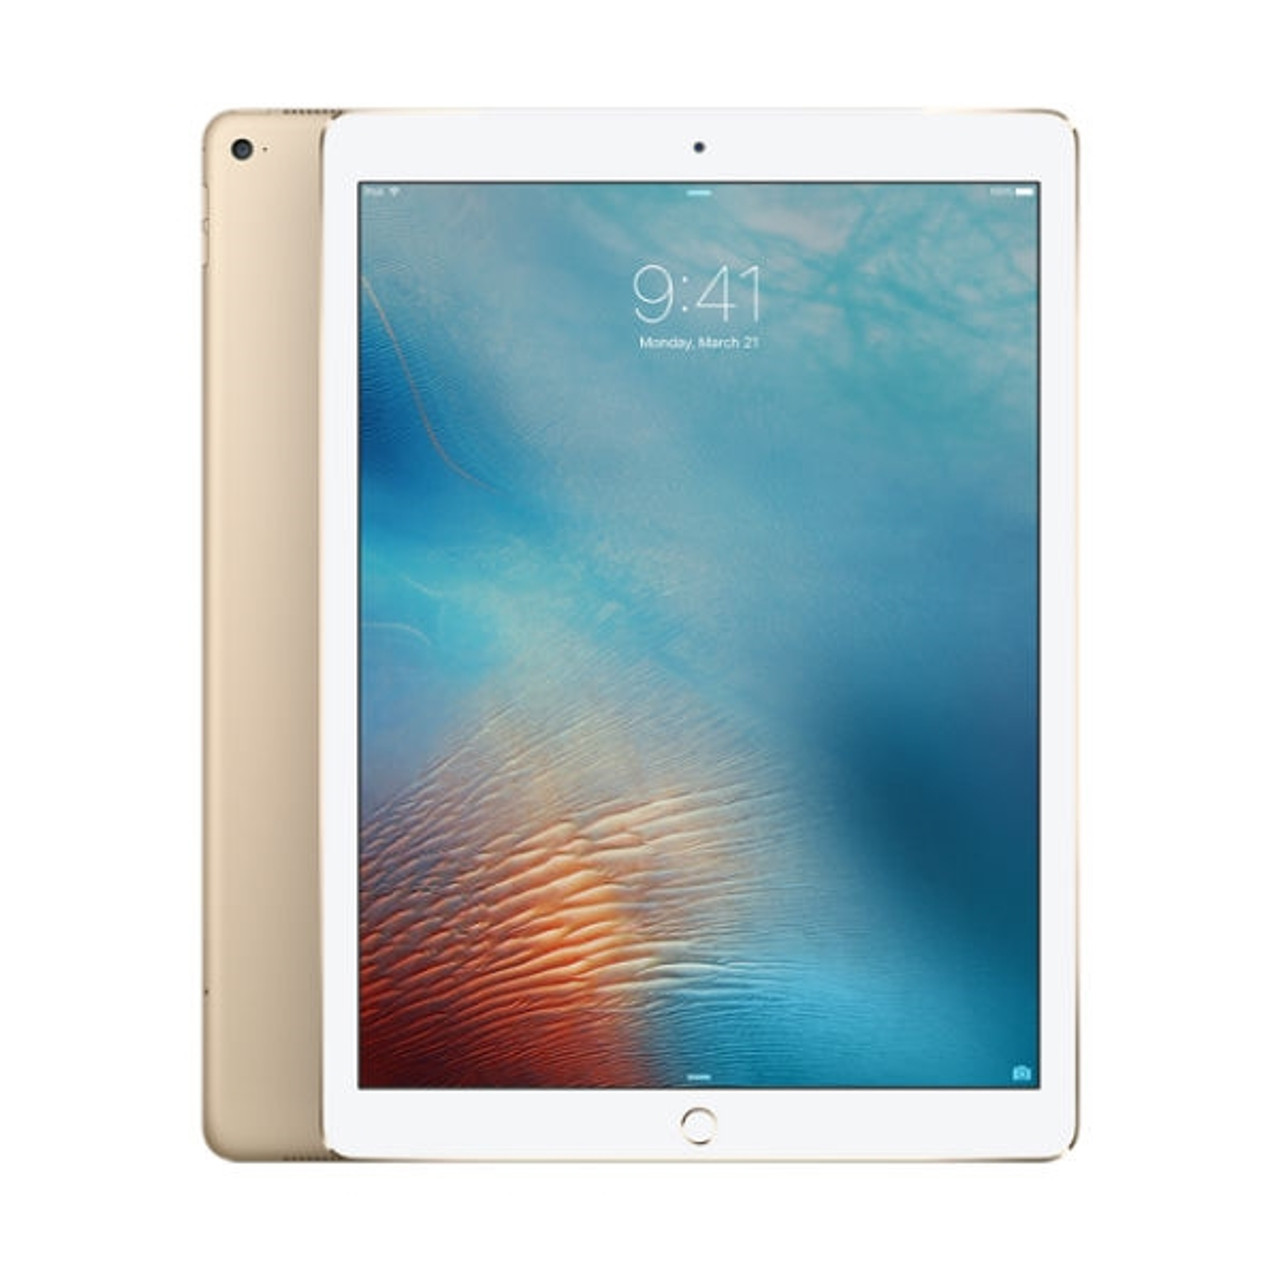 Apple iPad Pro 12.9-inch Wi-Fi + Cellular (Unlocked) 128GB - Gold ML3R2LL/A  - Very Good Condition*